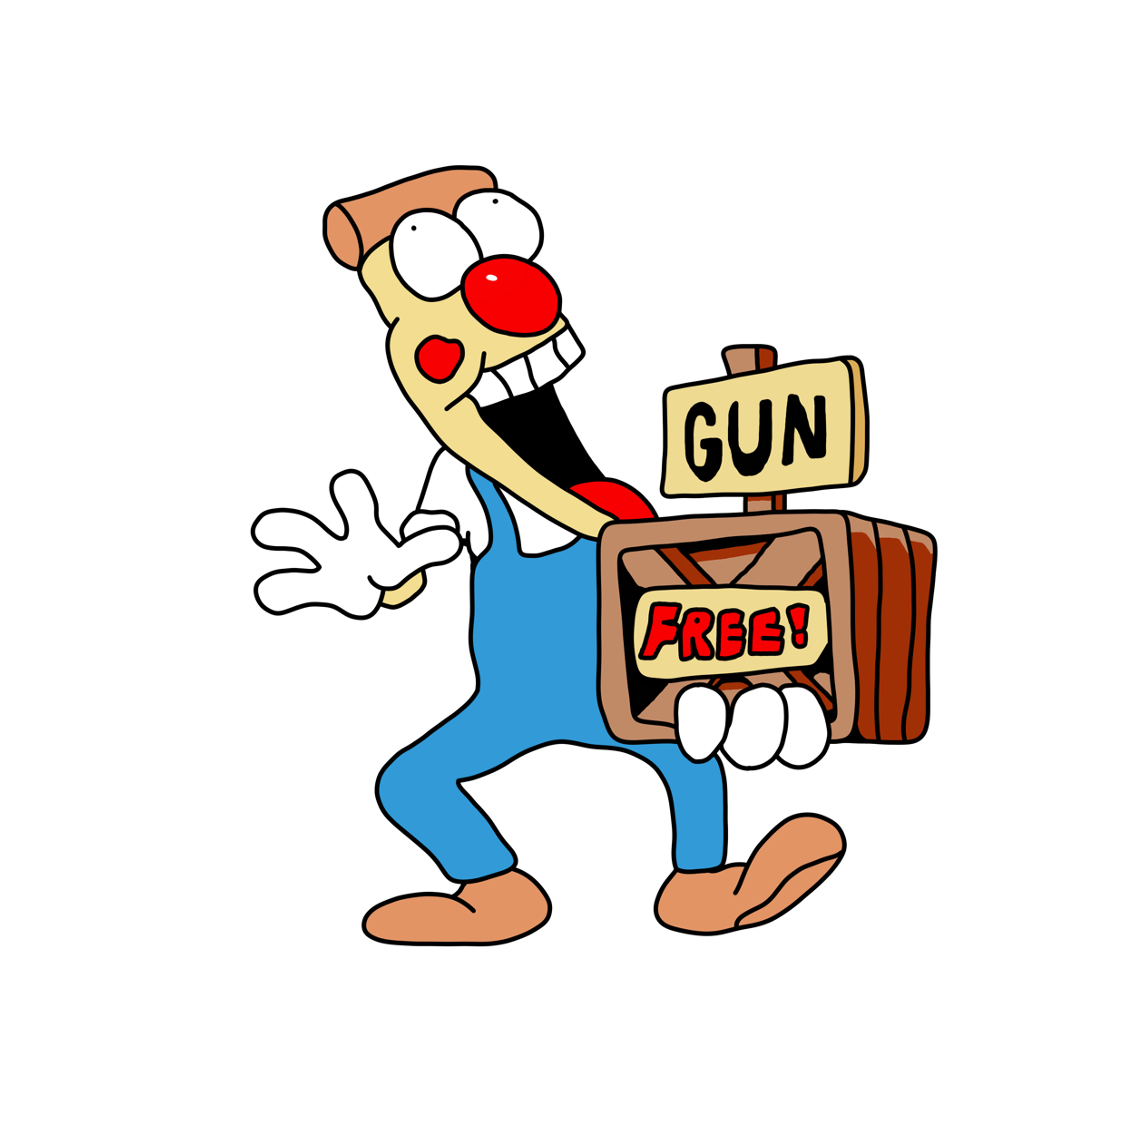 Pizzahead - Gun Free Box - Emote by GrimCrow205 on DeviantArt